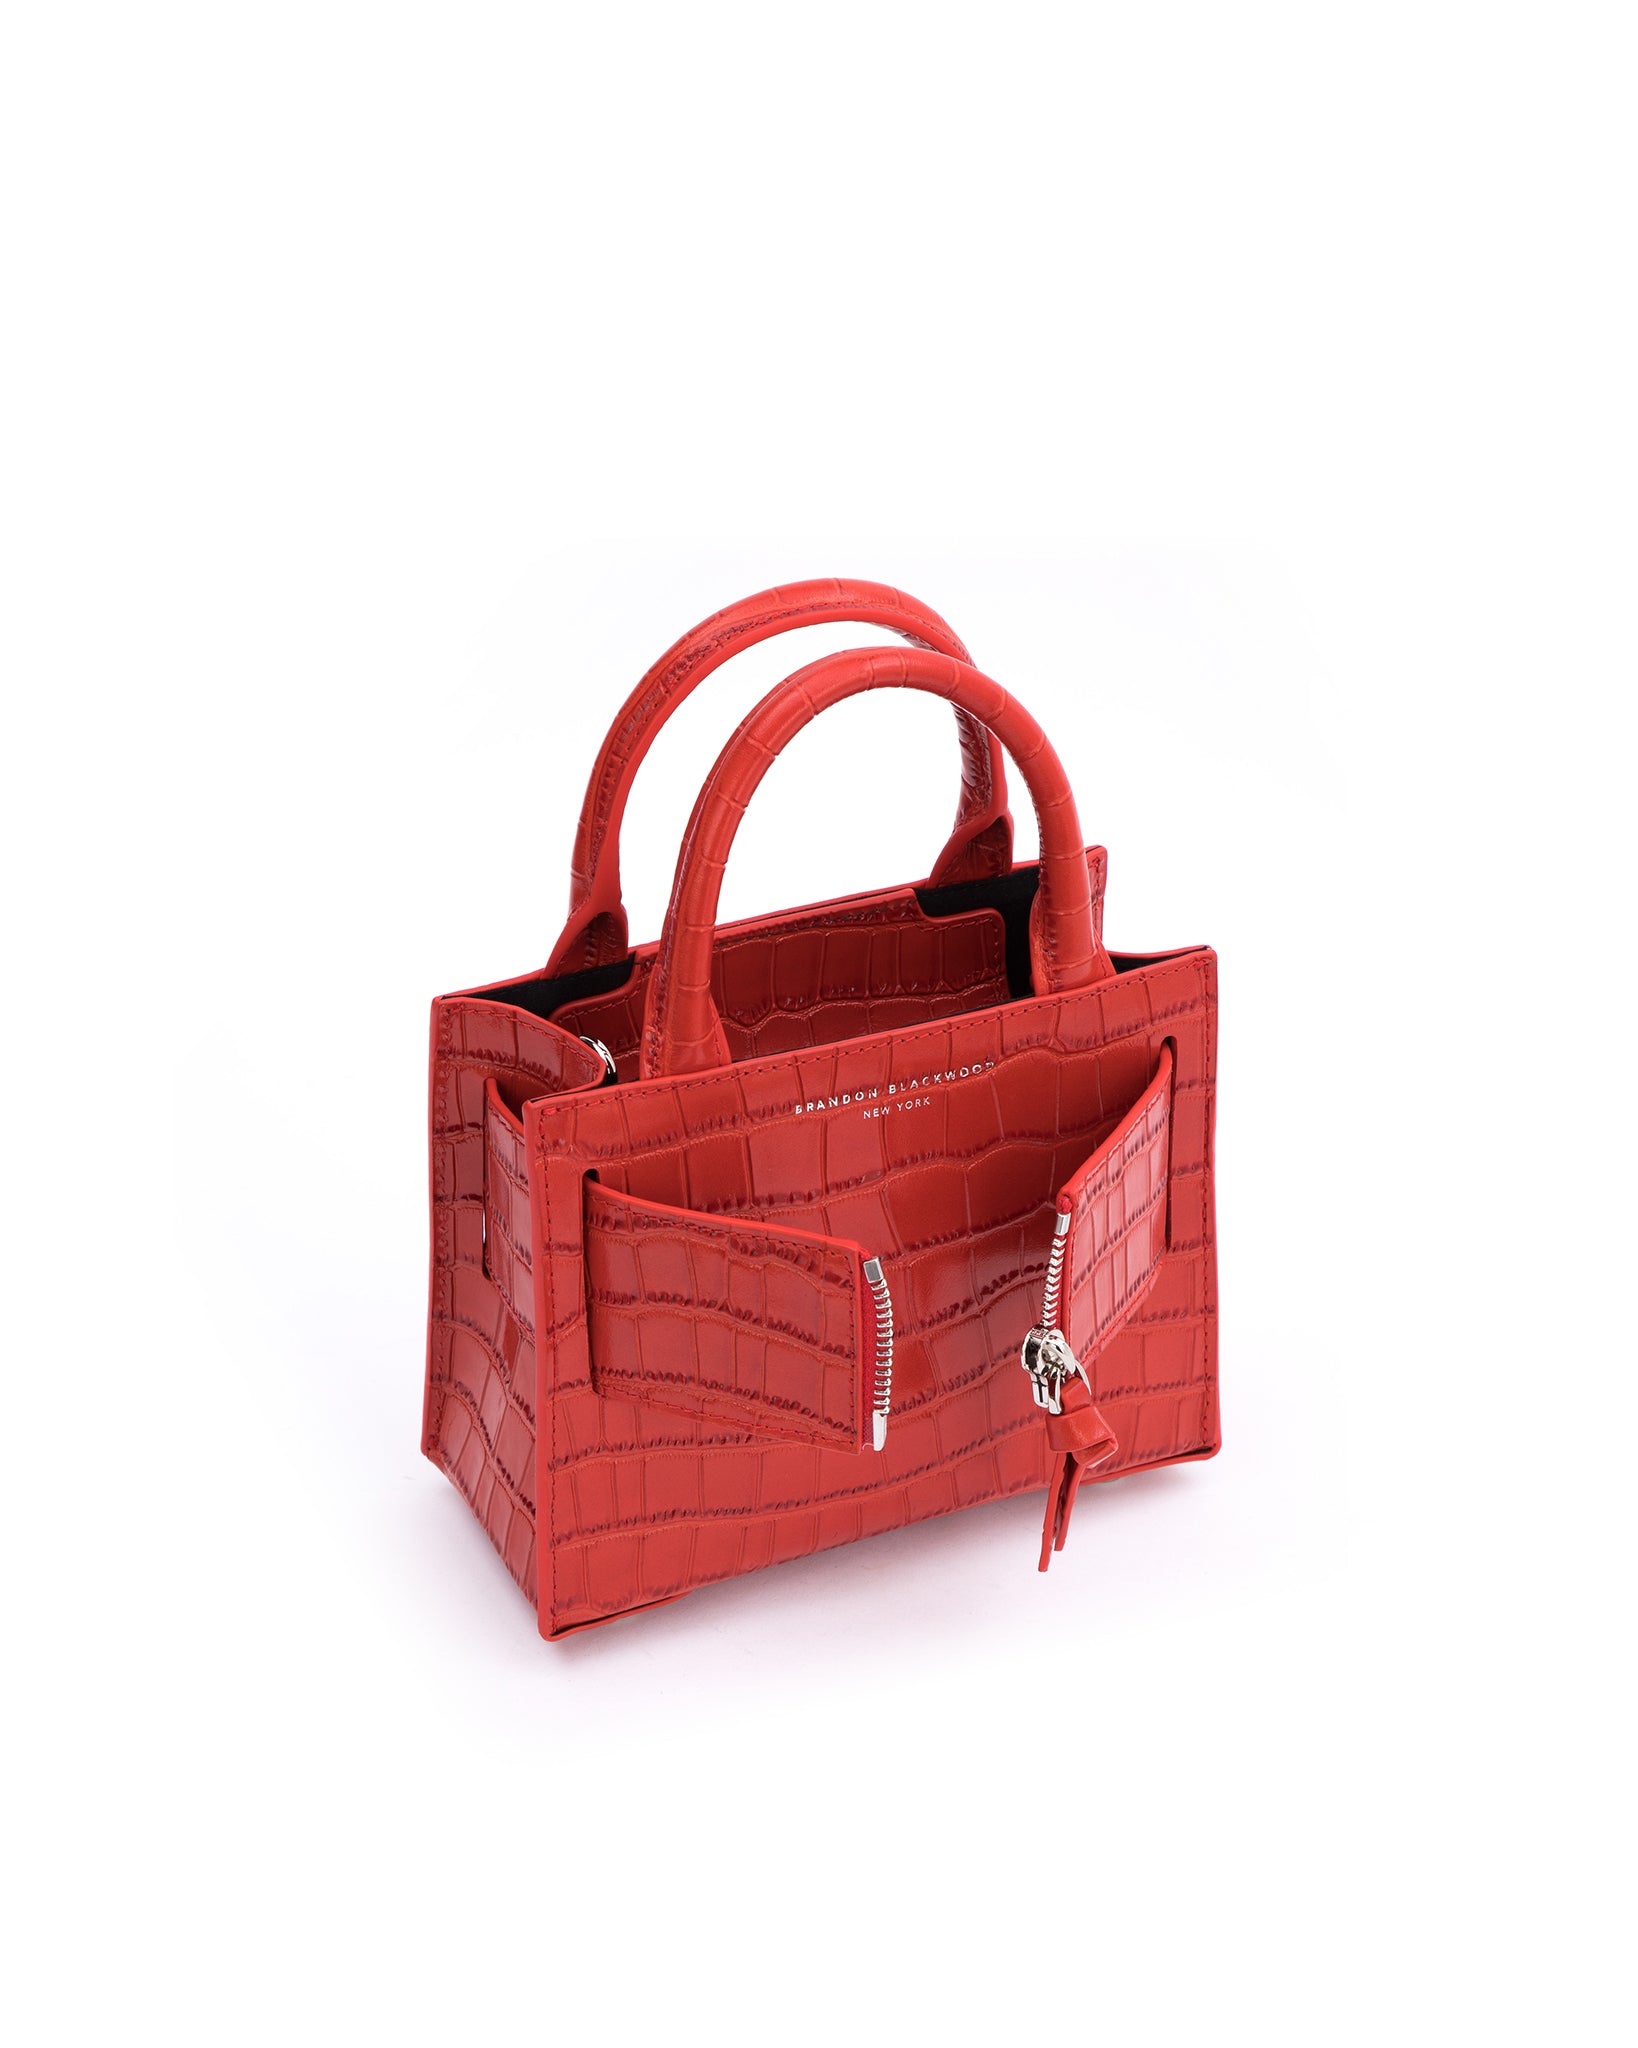 KONOMU, Robo Bag - Red Wood, Crossbody Bag